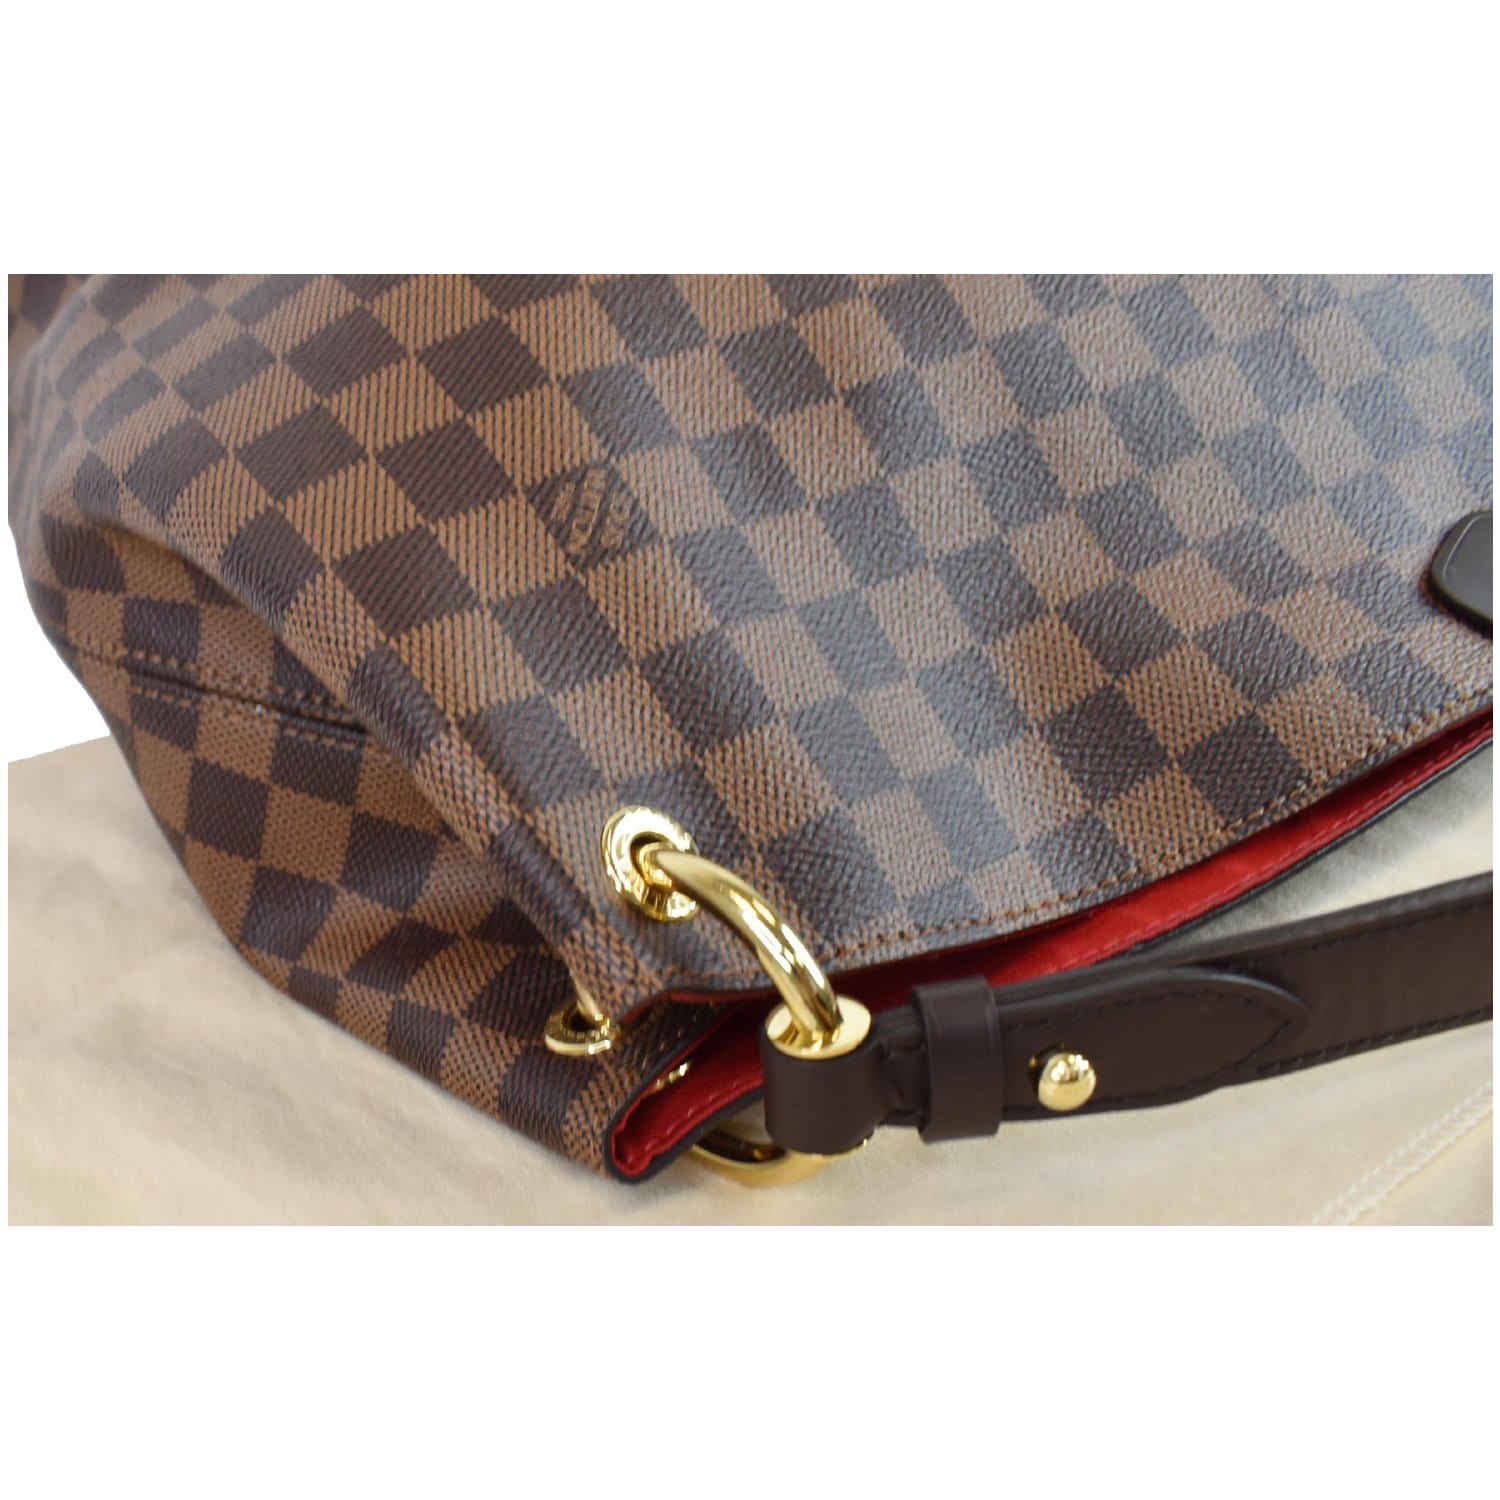 Louis Vuitton Damier Ebene Graceful MM - Brown Hobos, Handbags